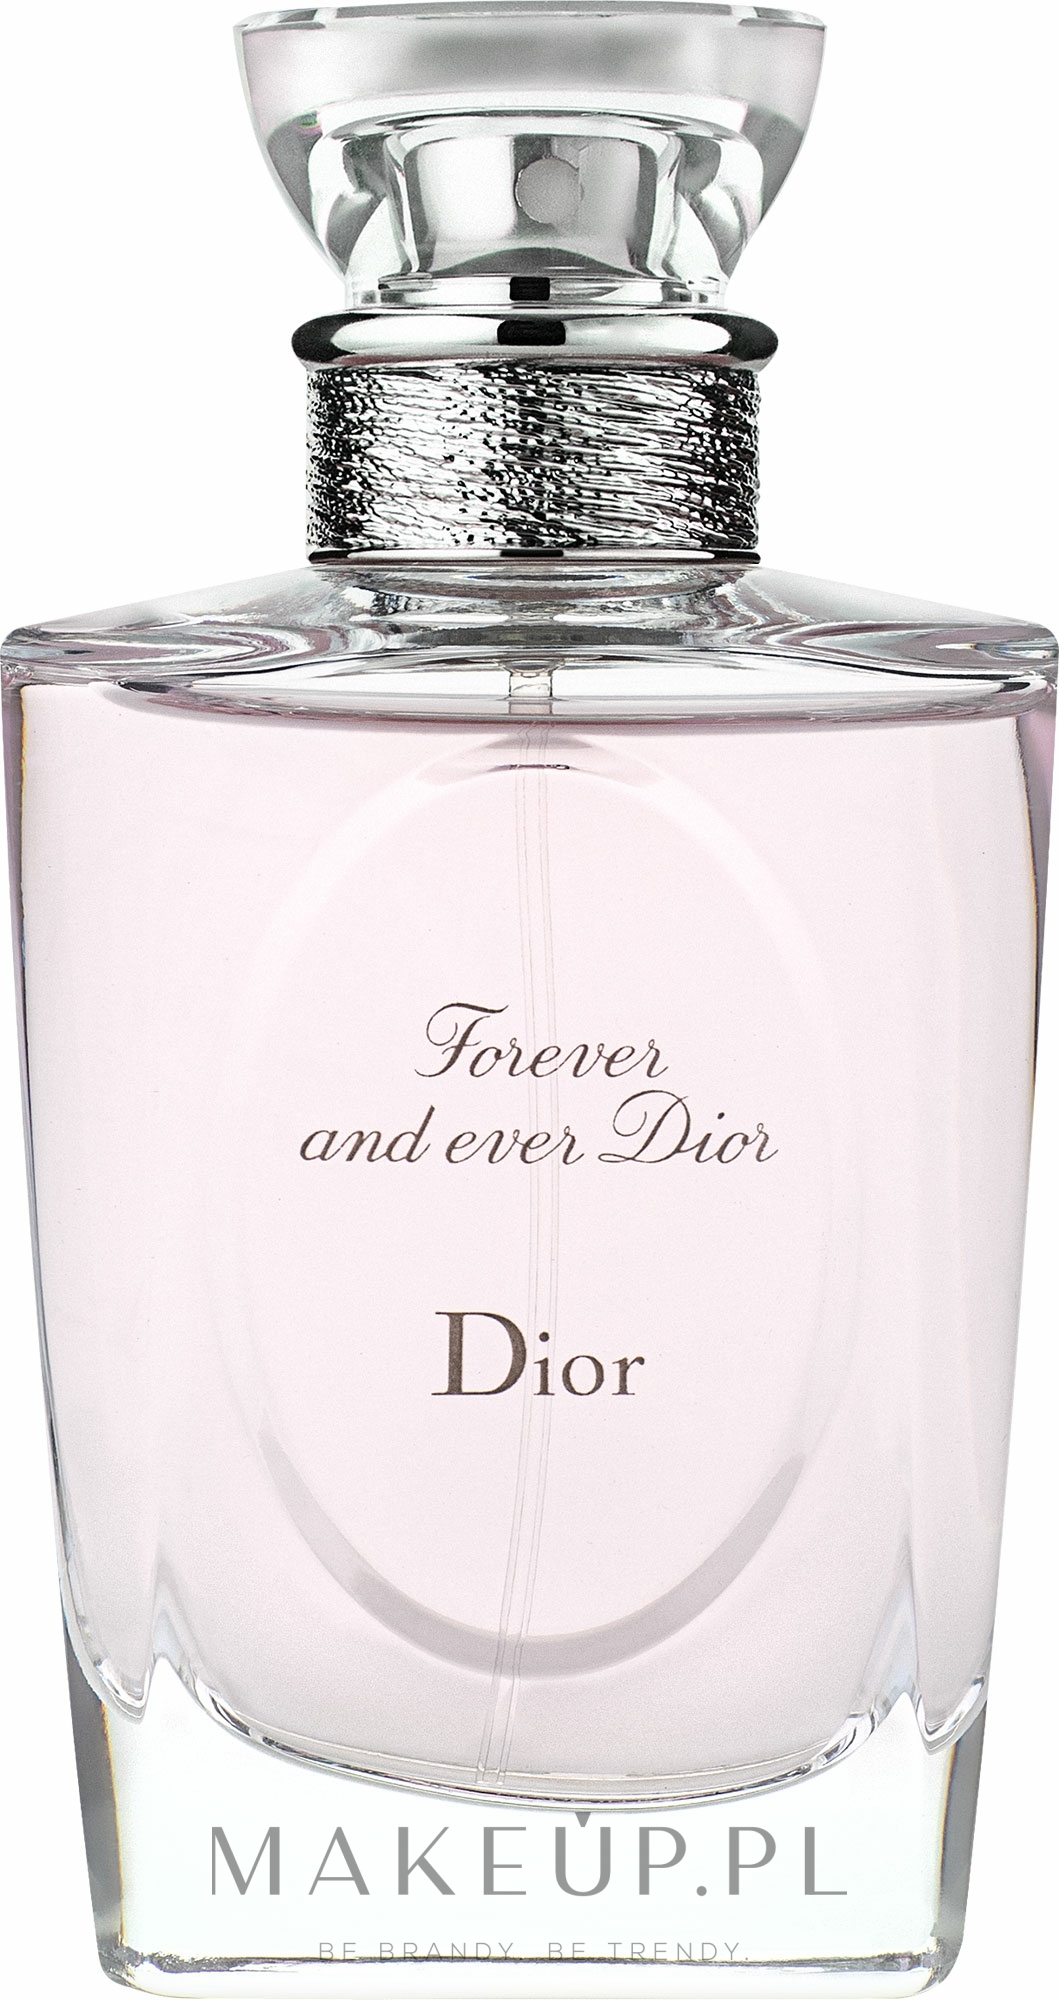 Dior Forever And Ever Dior - Woda toaletowa | Makeup.pl